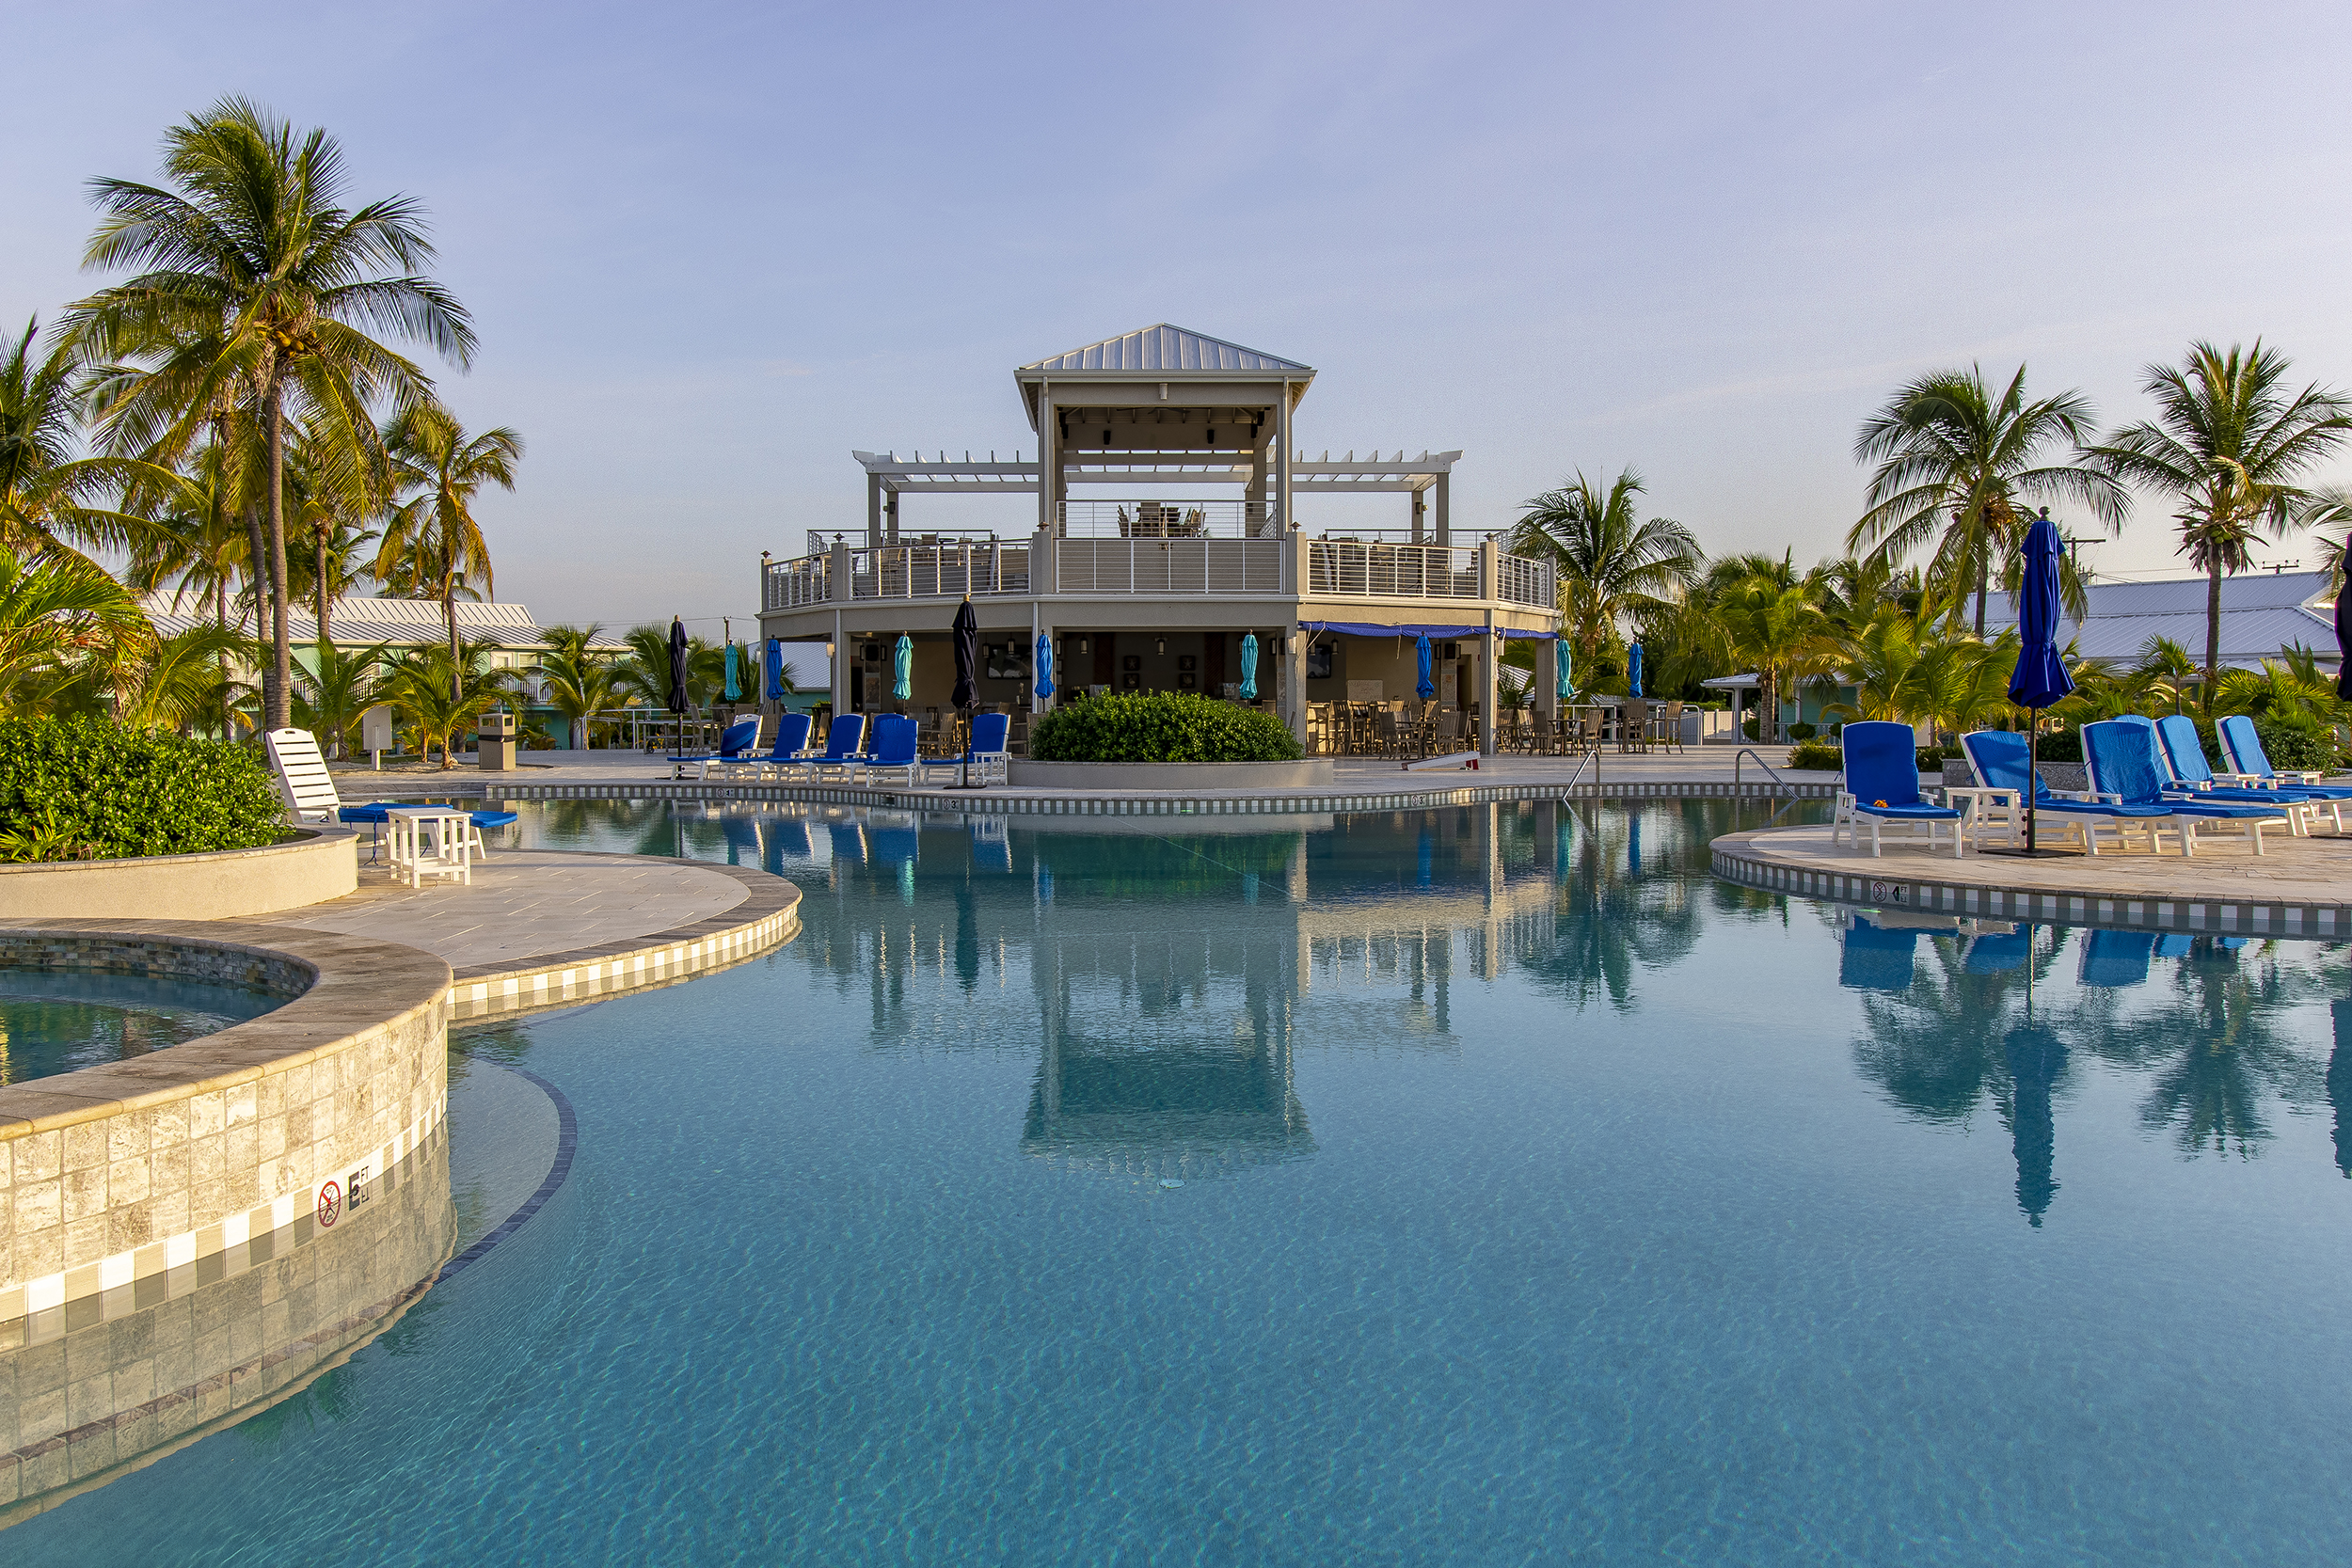 Cayman Brac Reef Beach Resort - Cayman Brac, Cayman Island pool